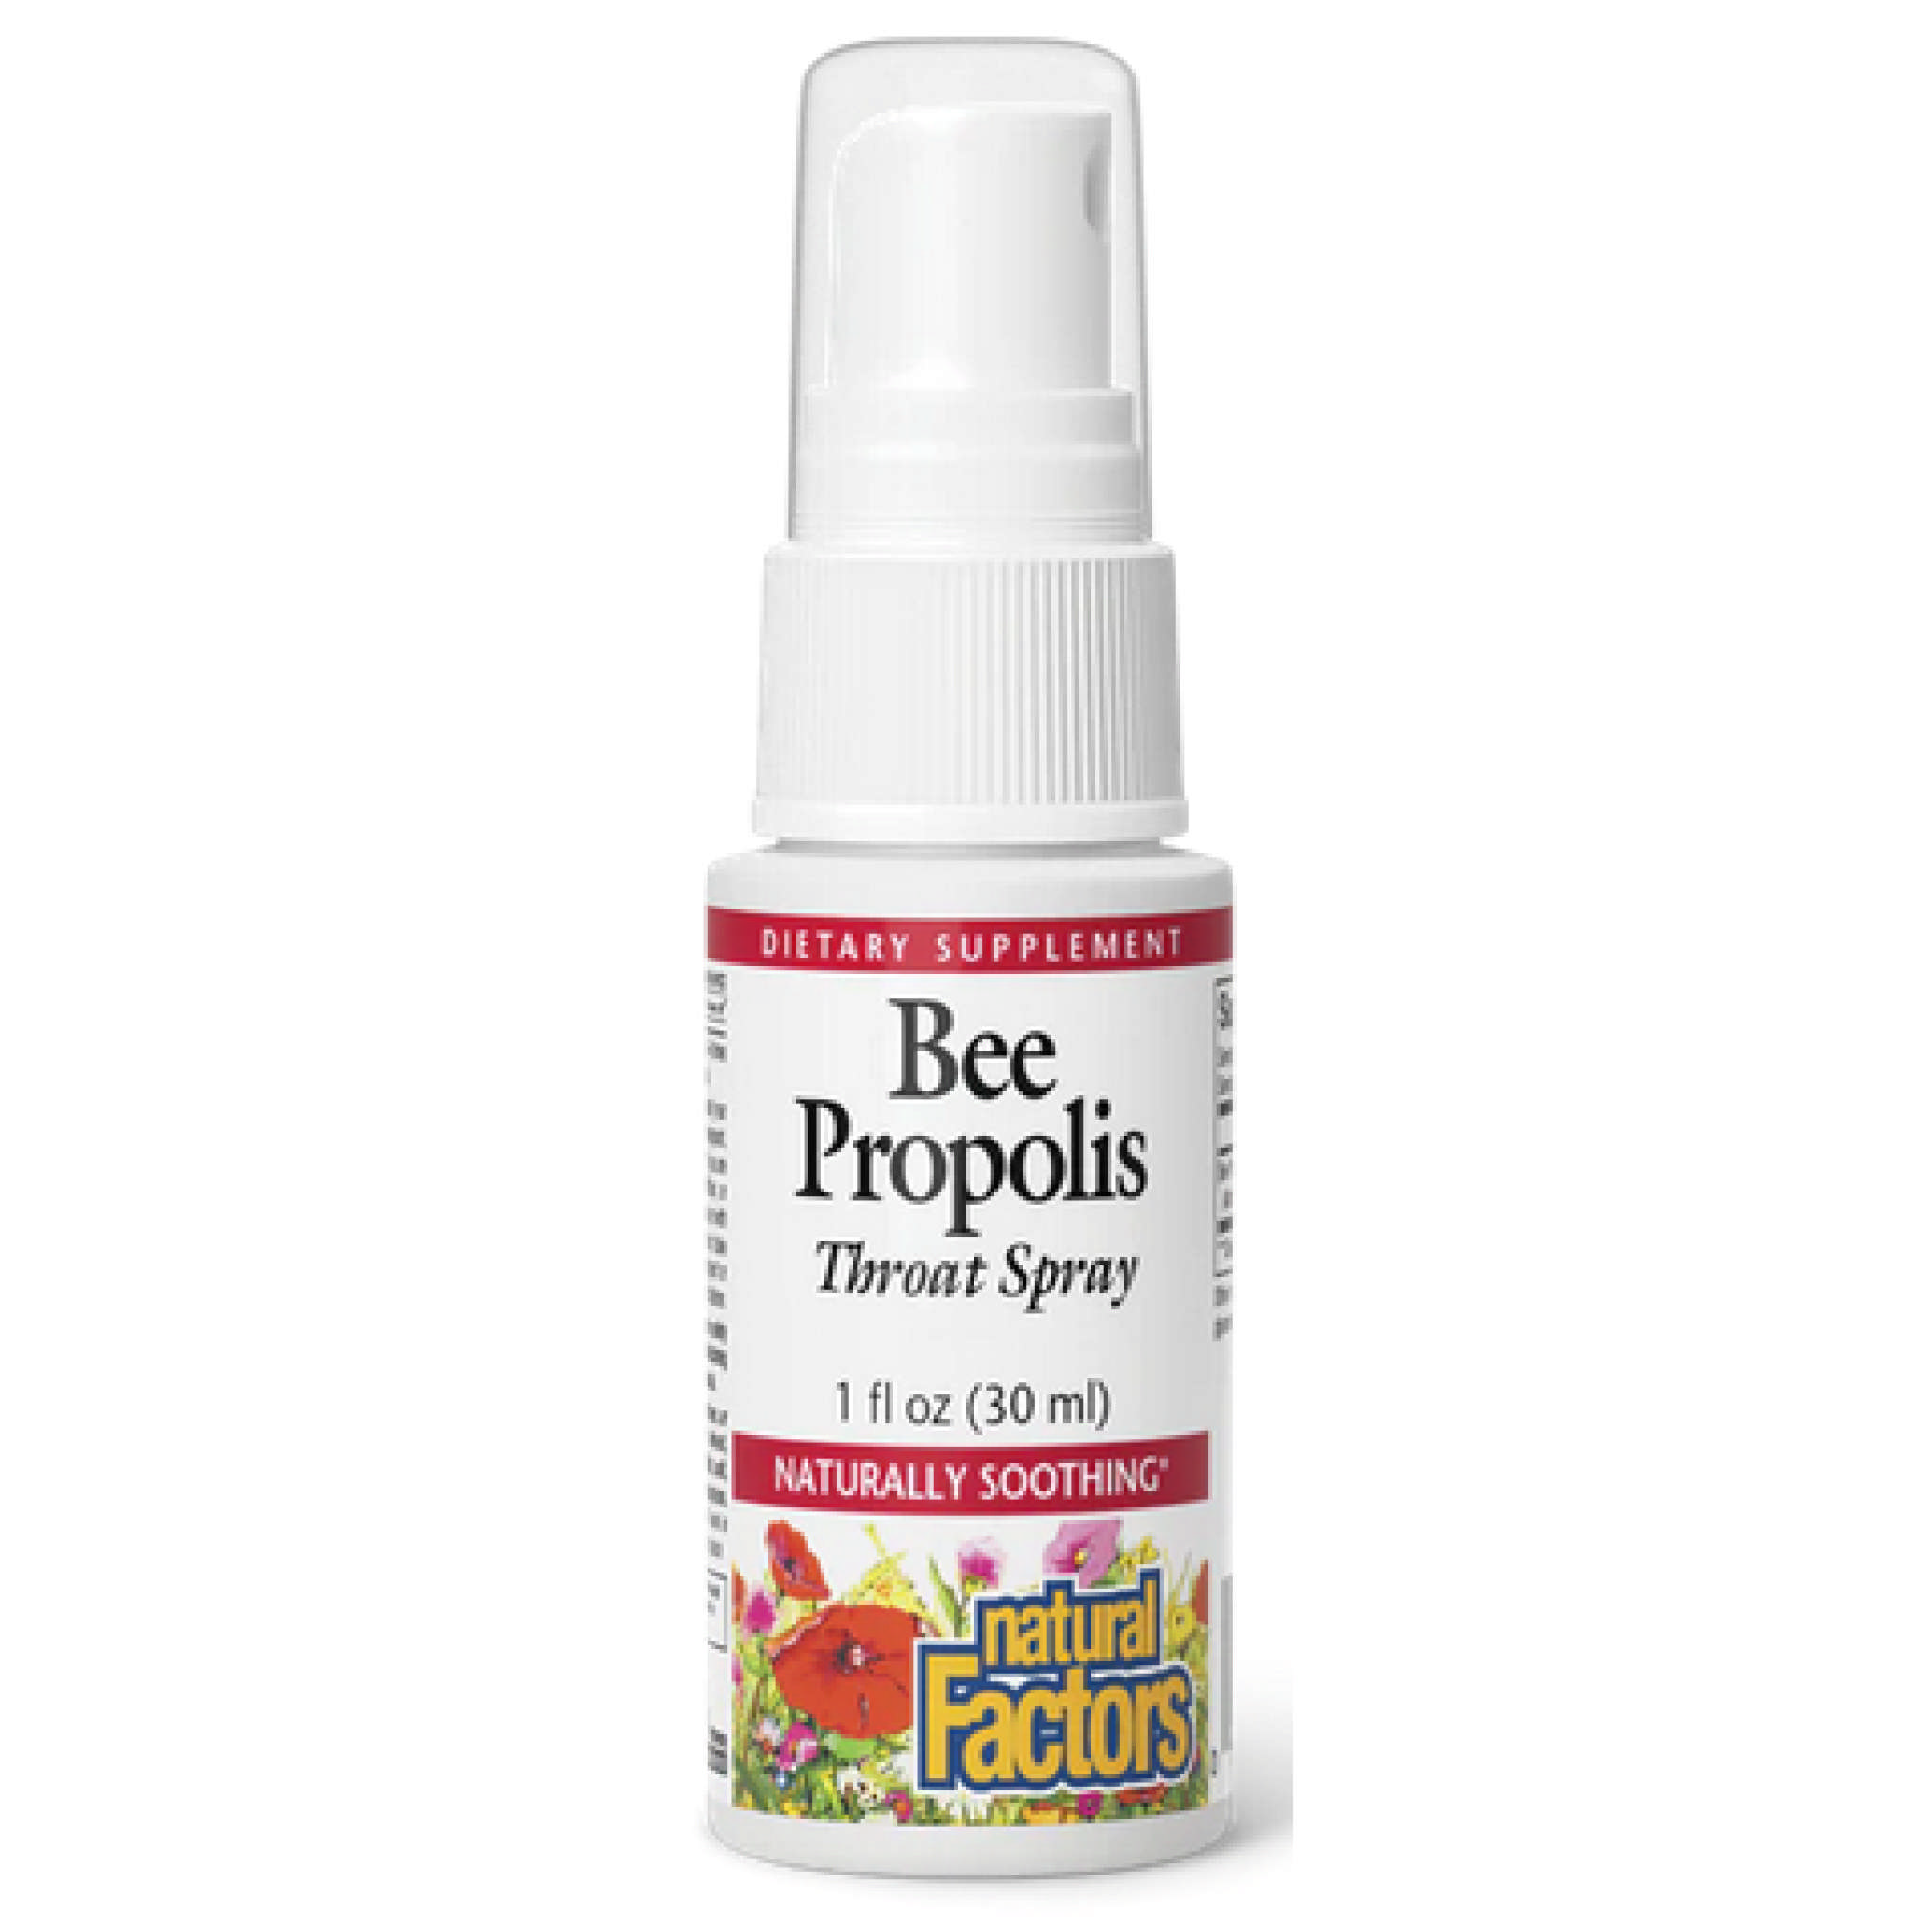 Natural Factors - Bee Propolis Throat Spray